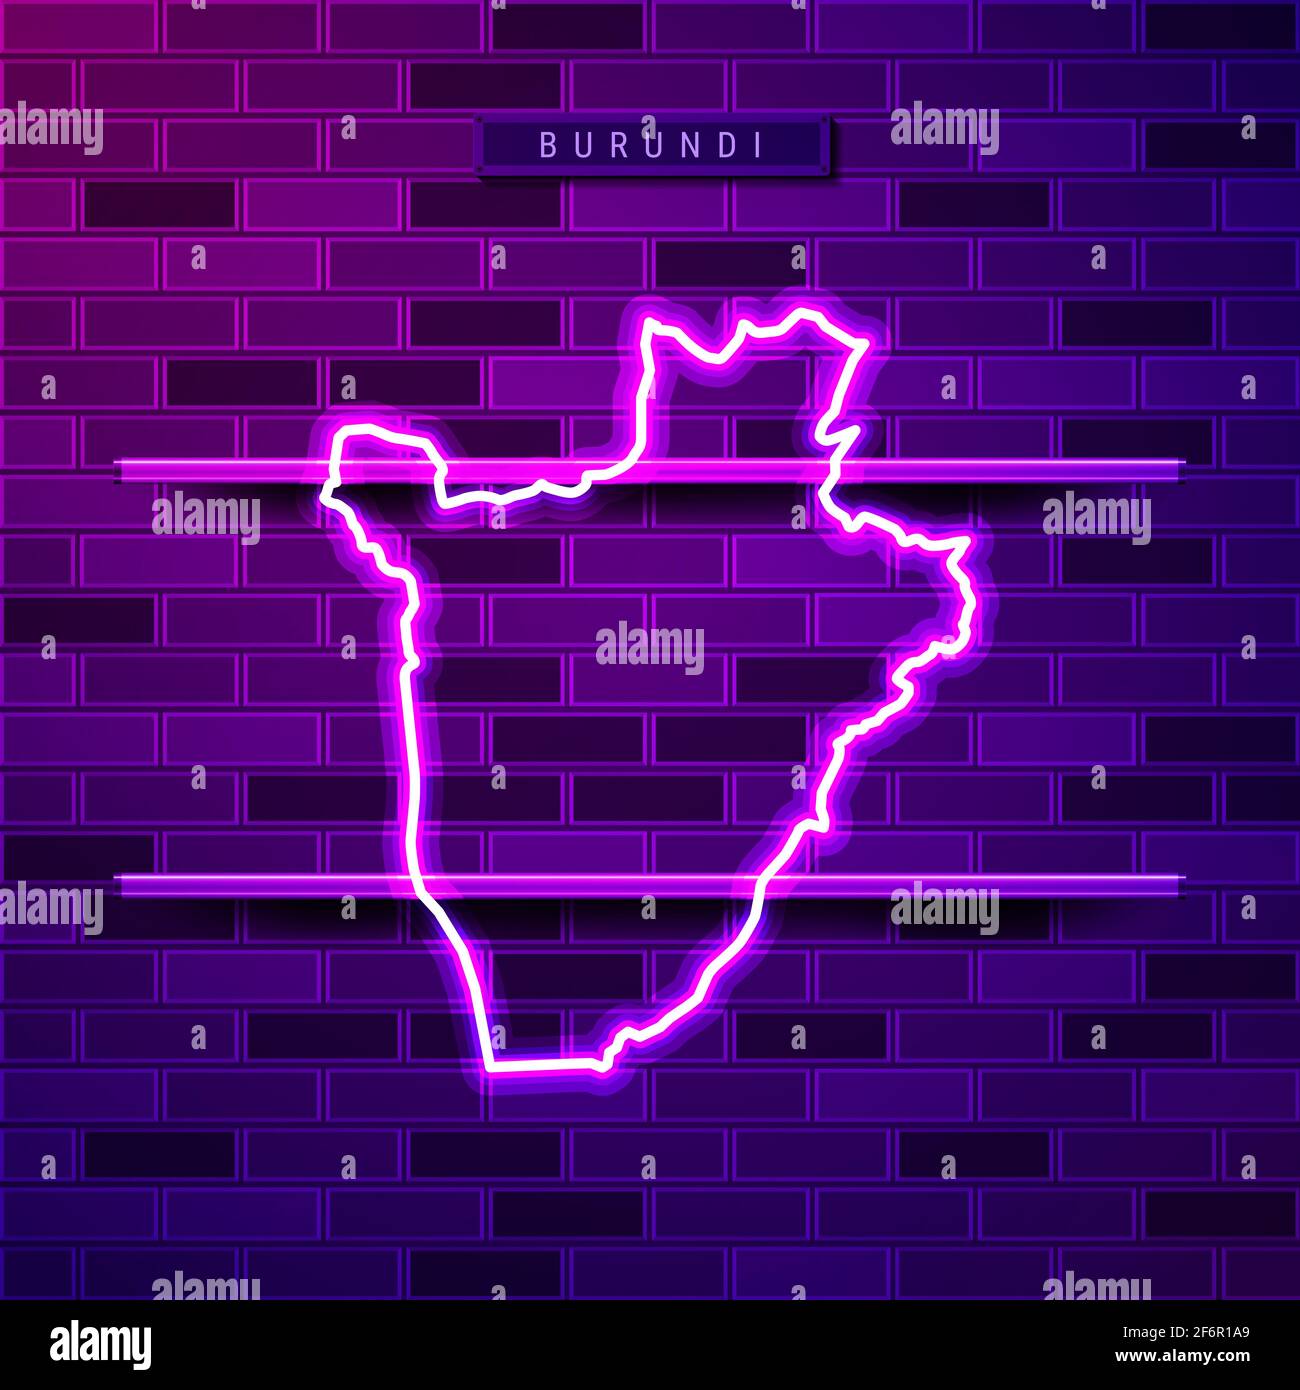 Burundi map glowing neon lamp sign. Realistic illustration. Country name plate. Purple brick wall, violet glow, metal holders. Stock Photo